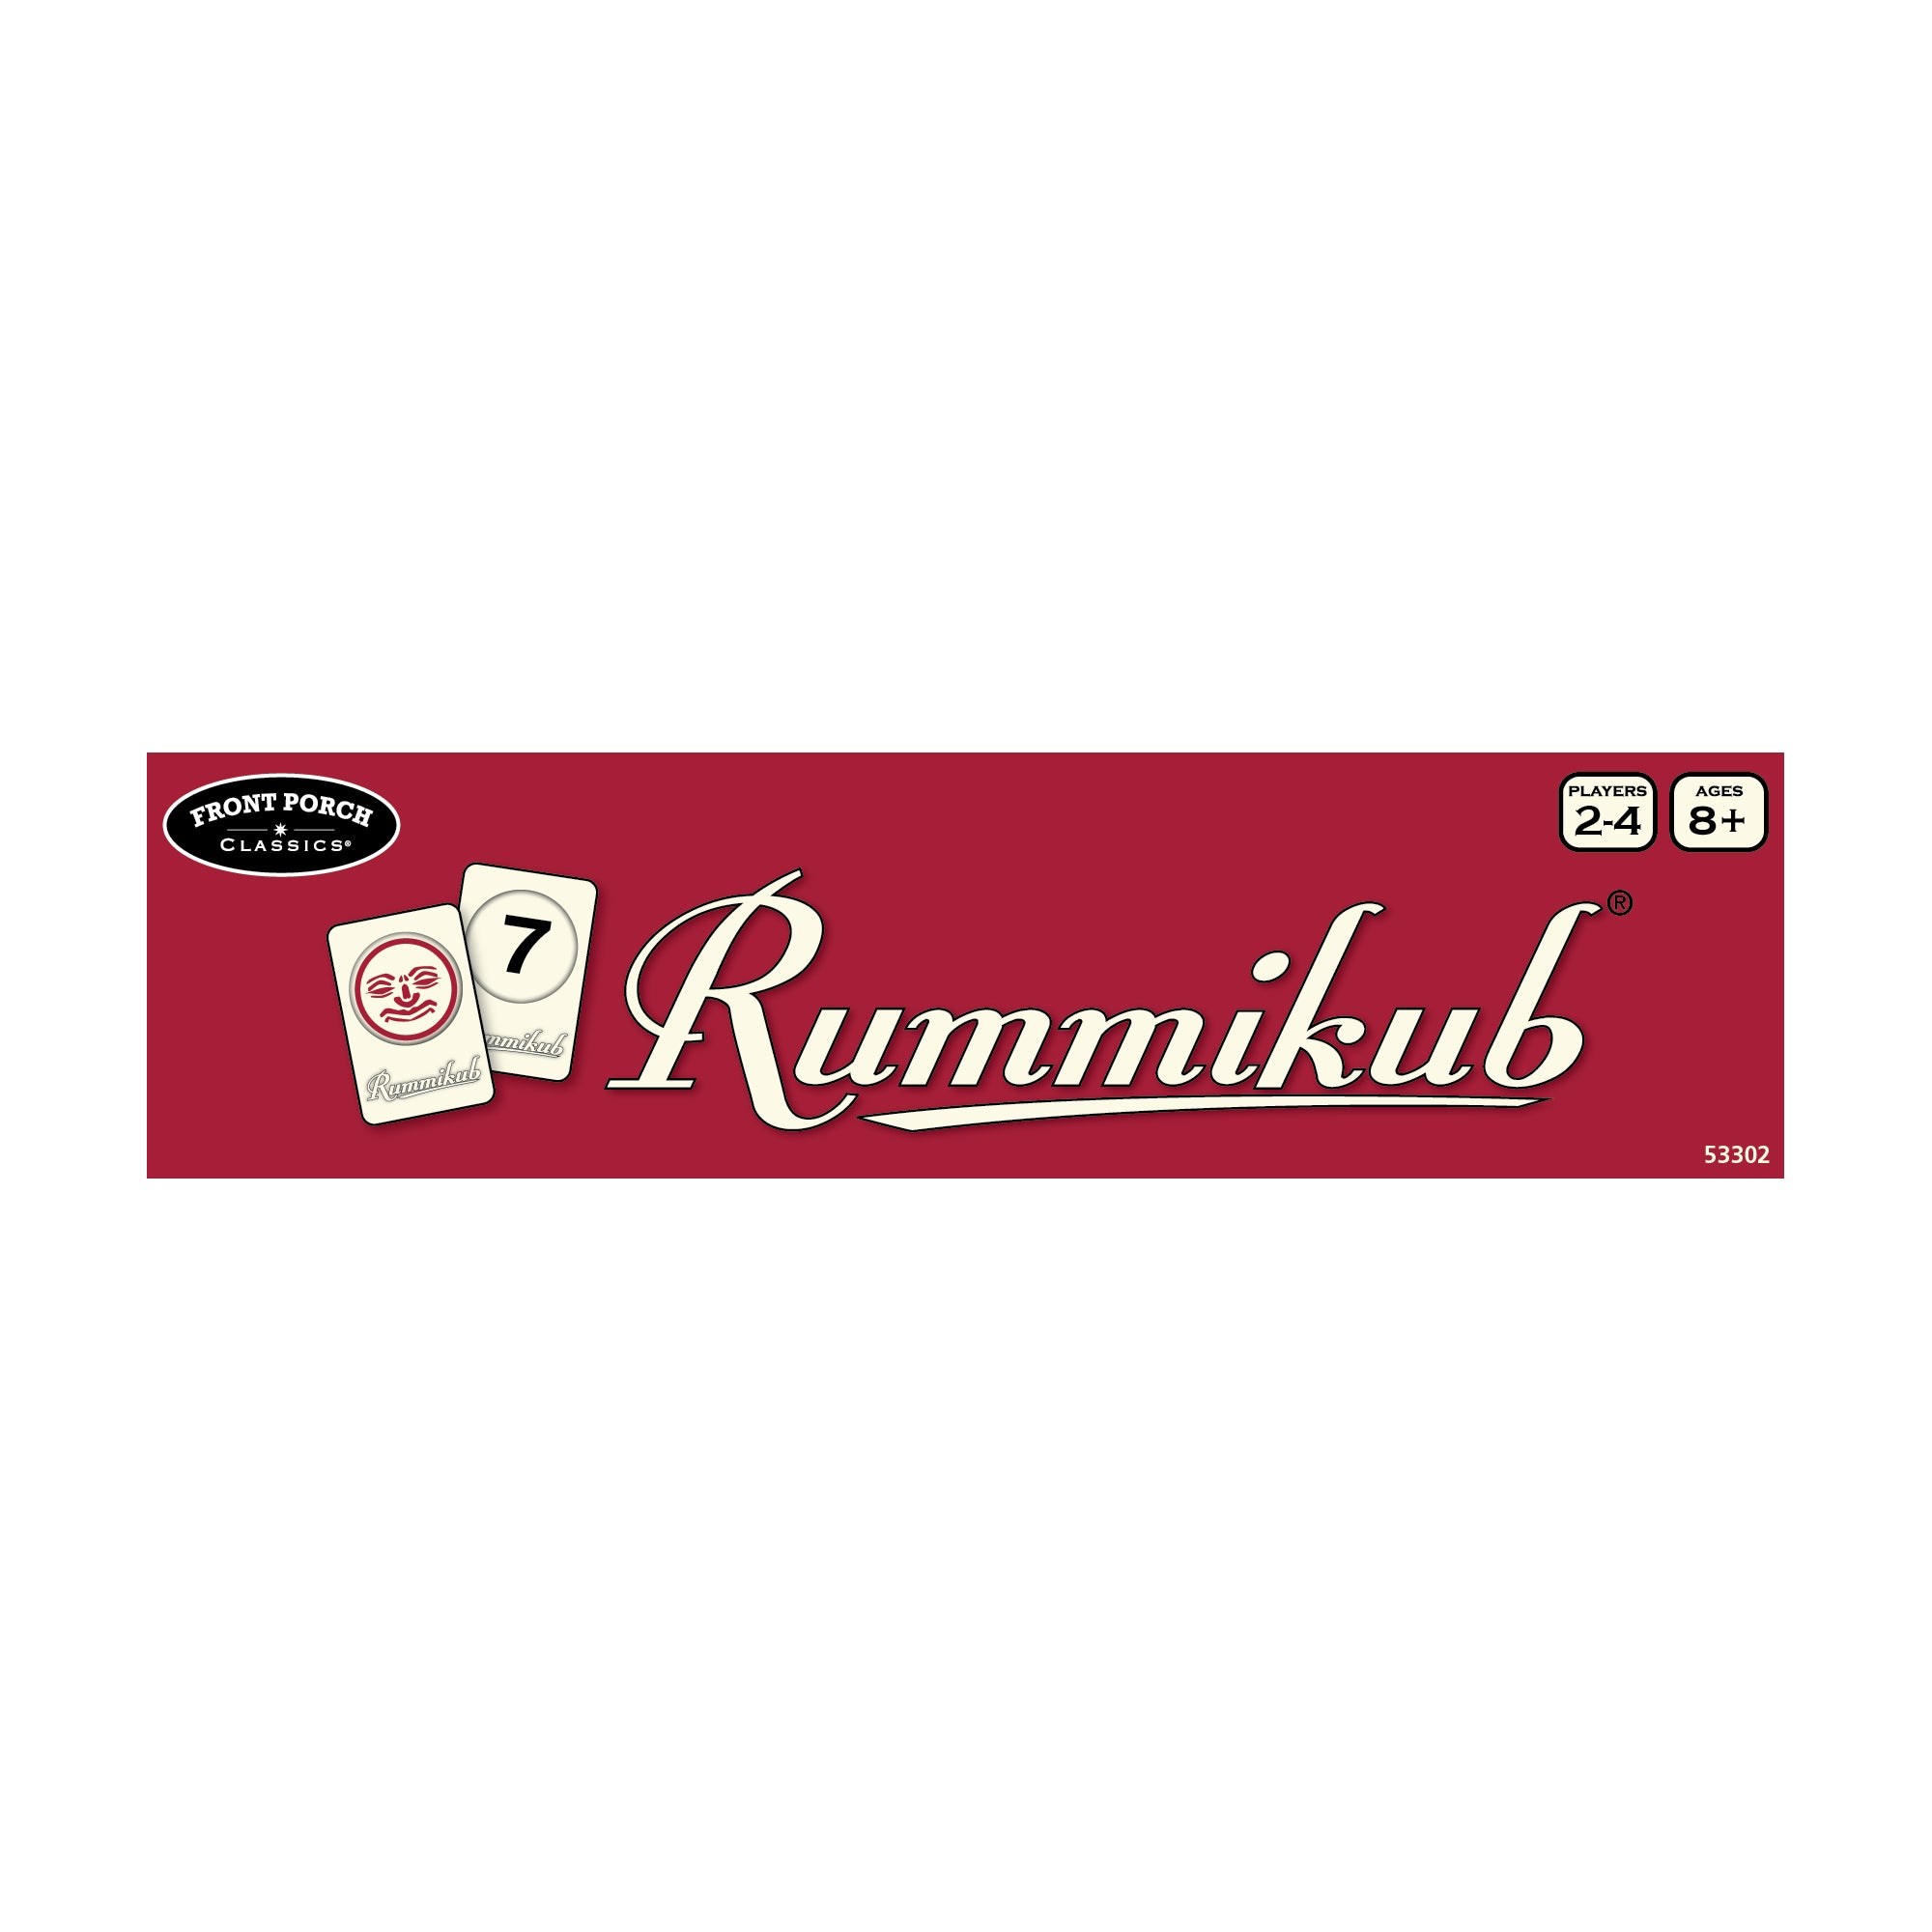 Rummikub 6 Player Edition